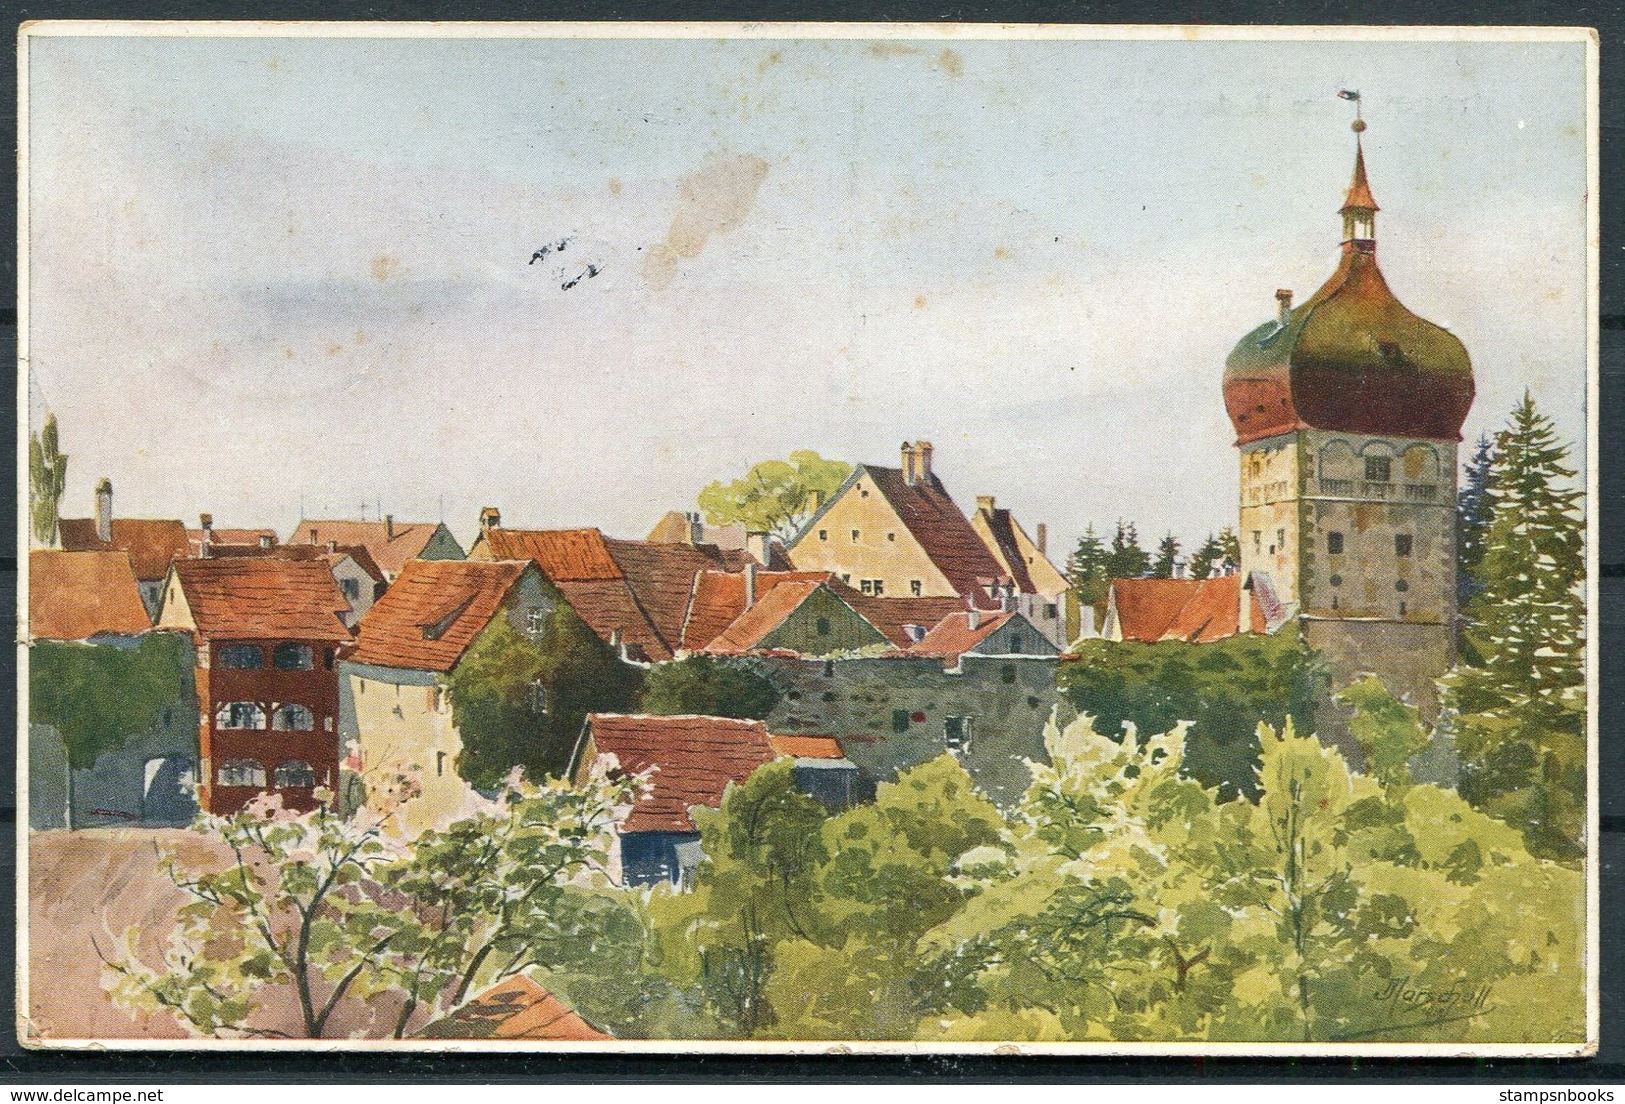 1929 Austria Bregenz Bodensee Postcard Lindau - Lorch. Hotel Post, Schiffspost Ship - Covers & Documents